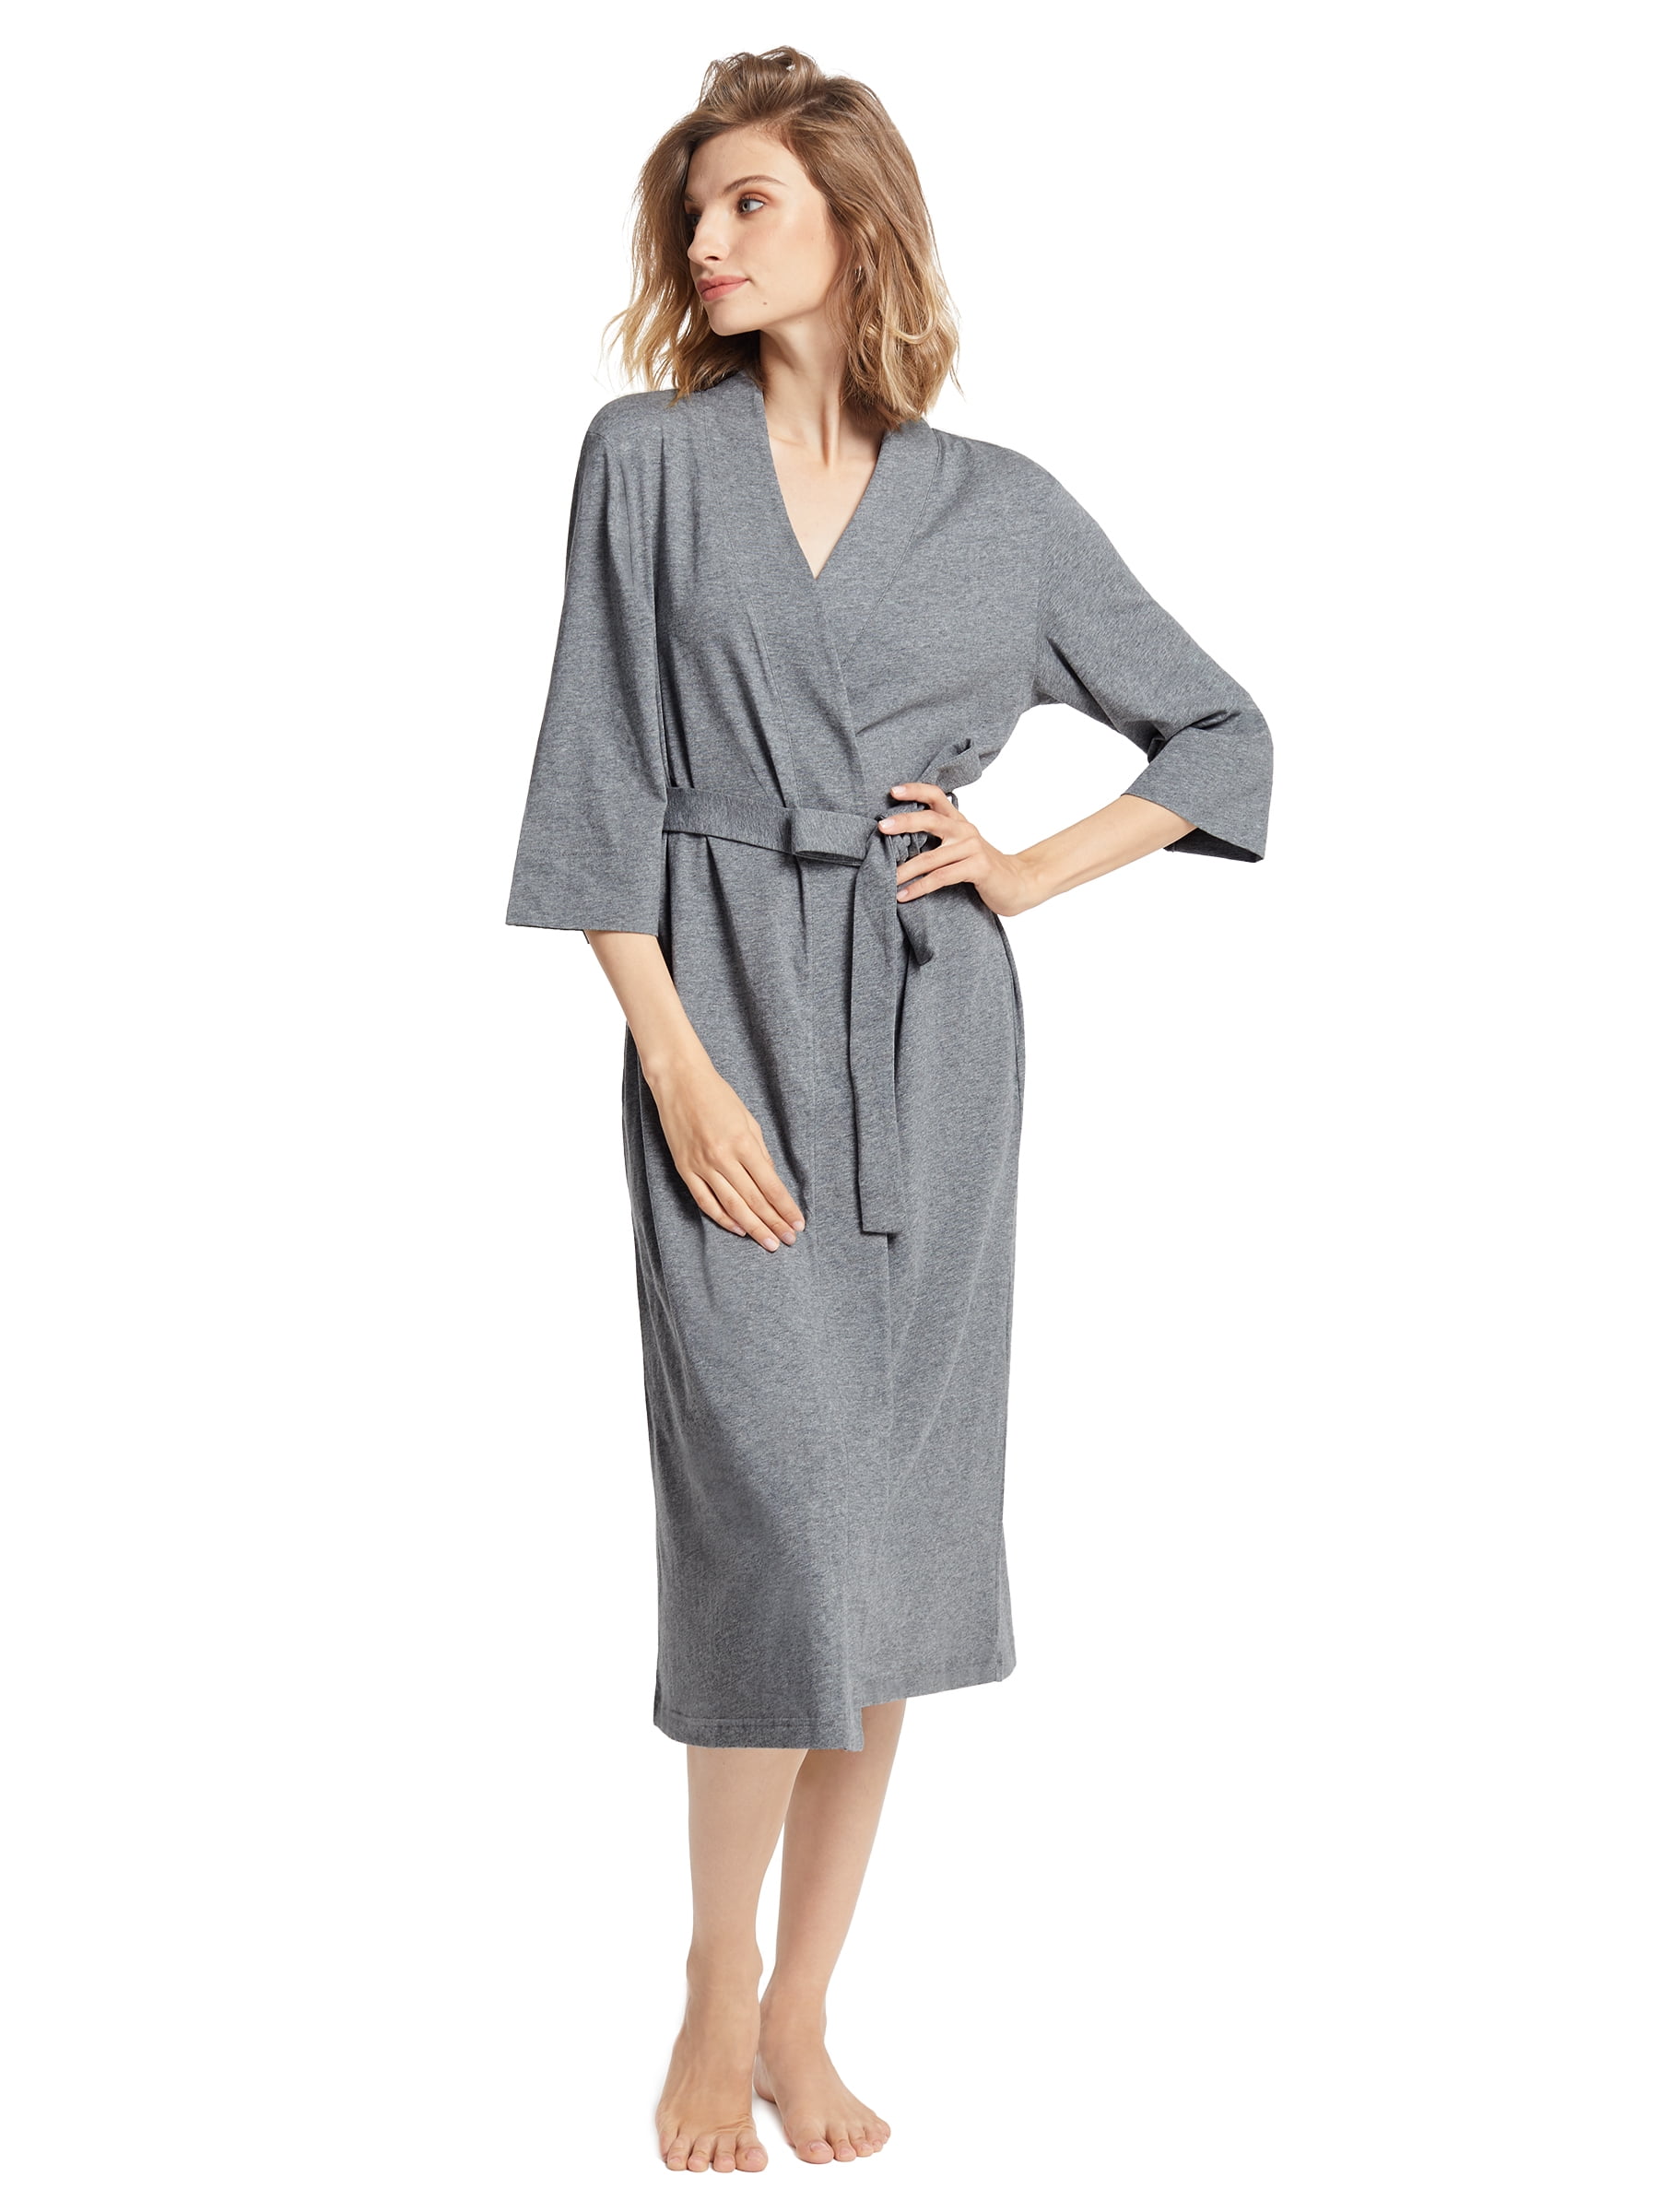 S-XL SIORO Women's Kimono Robe Femme Cotton Bathrobe Lightweight Knit Sleepwear Loungewear for House Spa Long